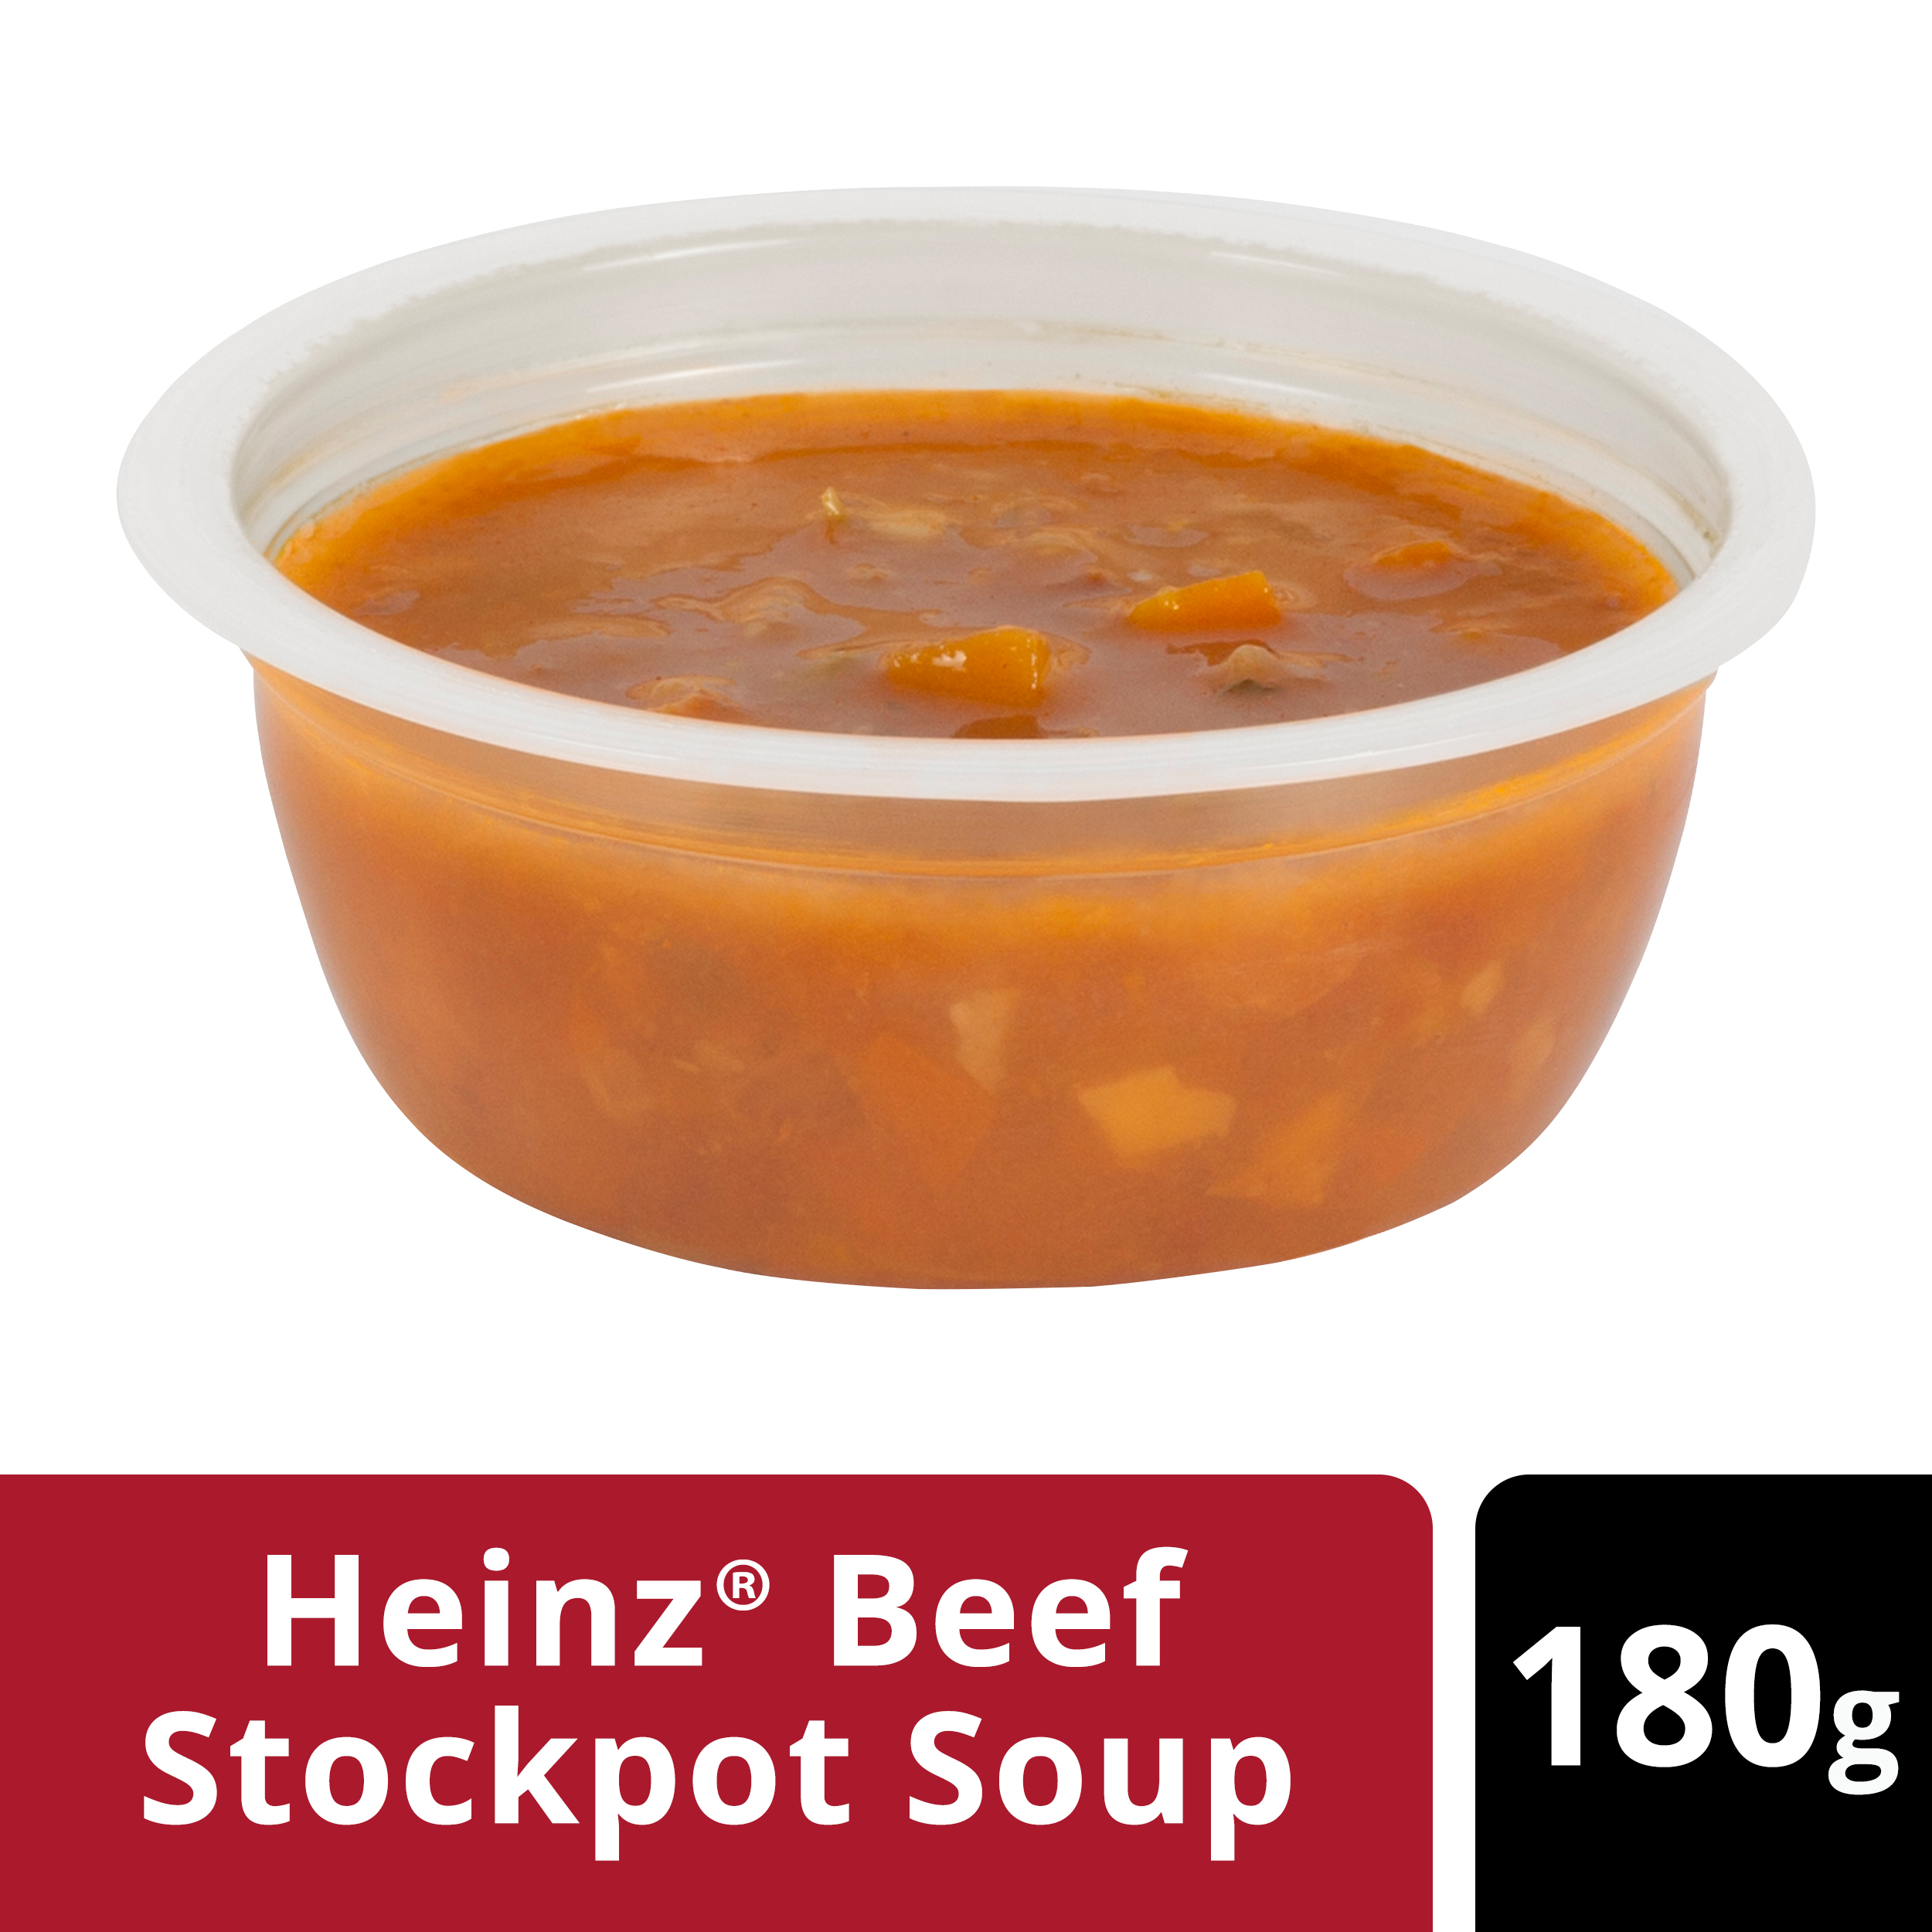  Heinz® Beef Stockpot Soup Portion 180g 